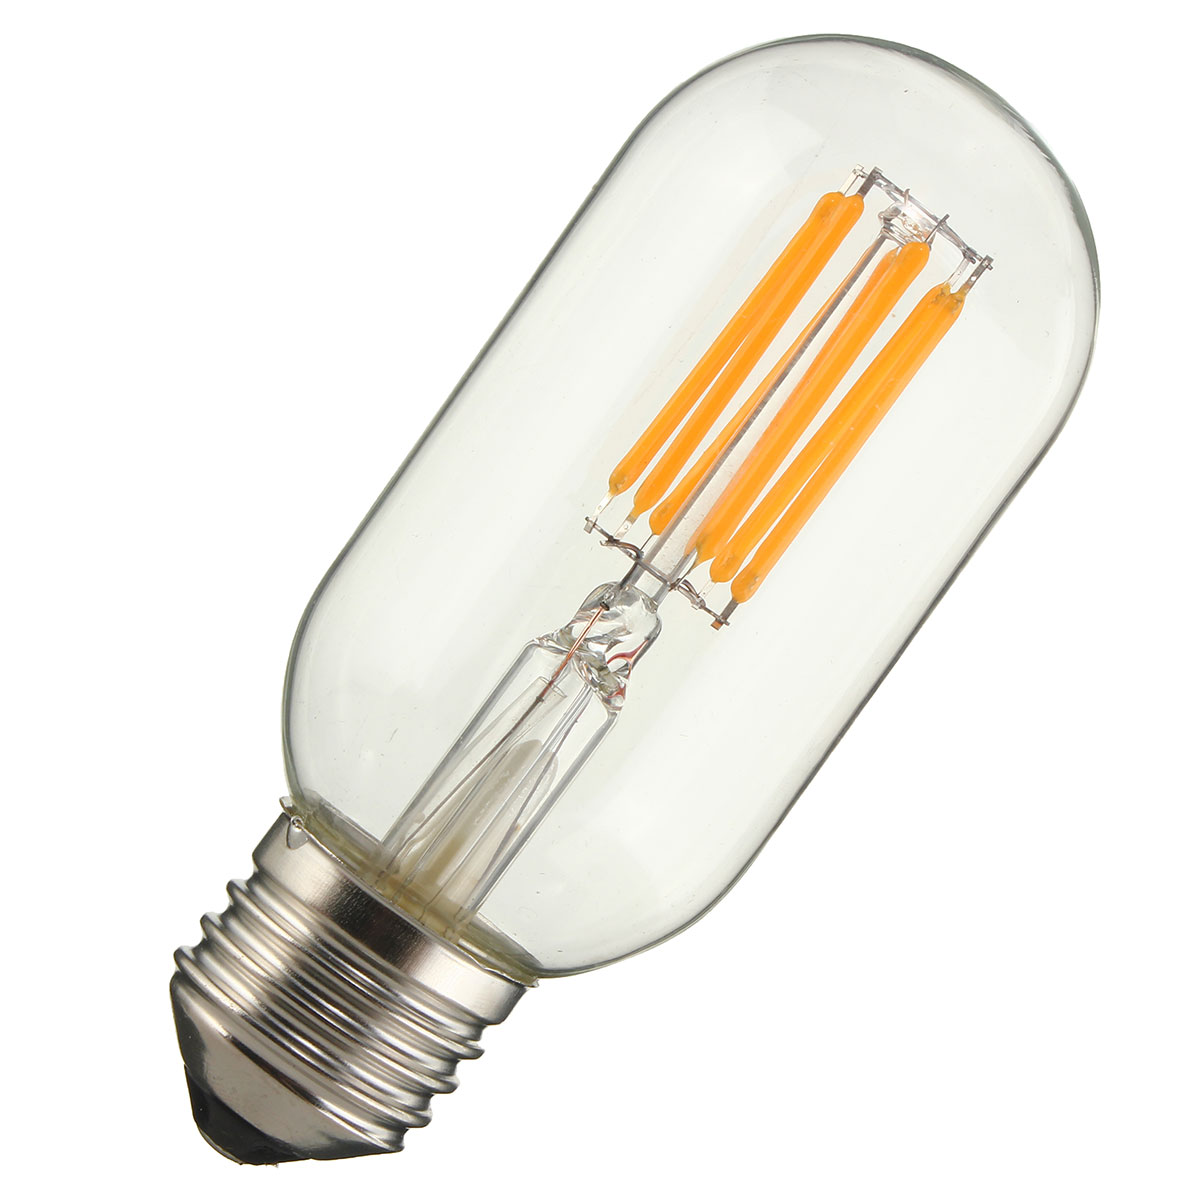 Dimmable-E27-E26-T45-6W-COB-Incandescent-Warm-White-Edsion-Restro-Light-Lamp-Bulb-AC110V-AC220V-1074235-6